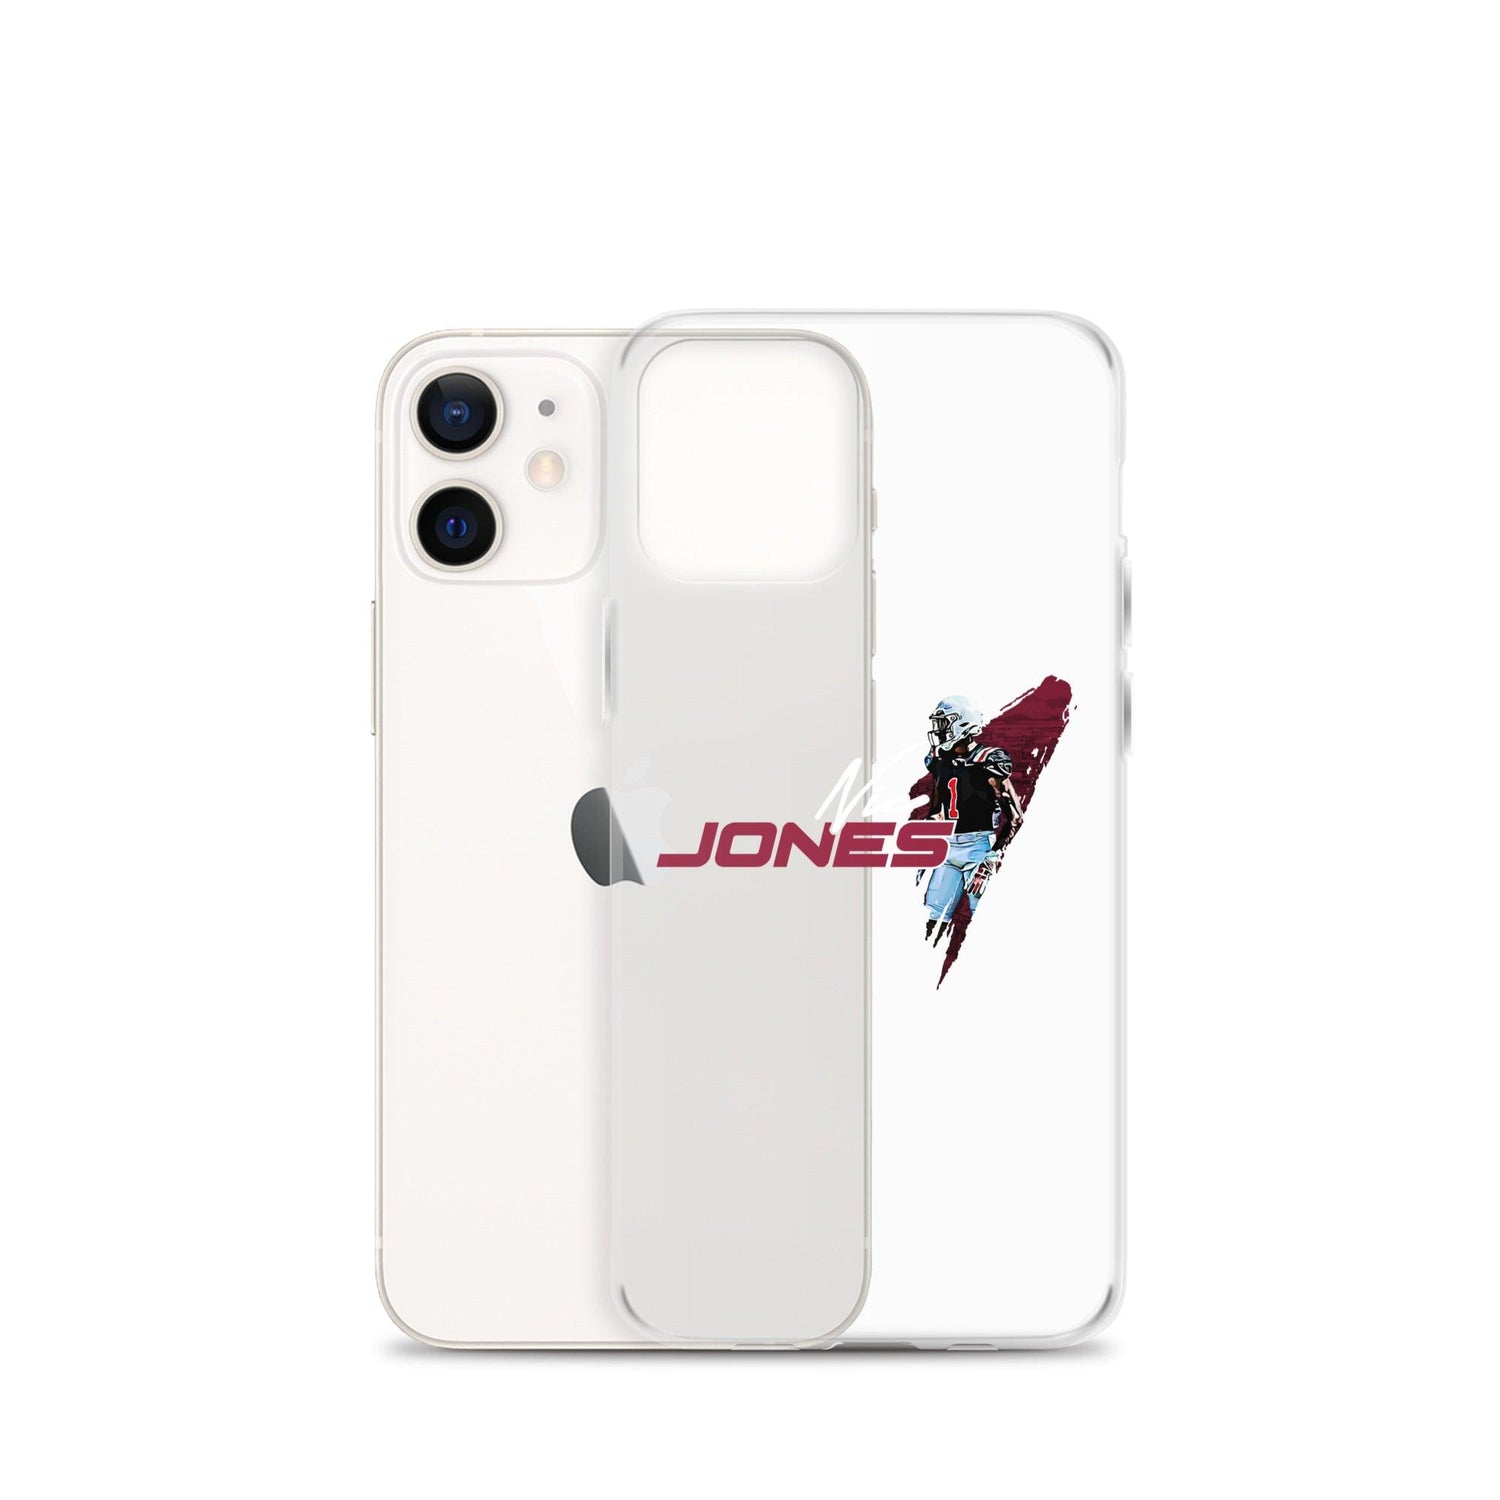 Nic Jones "Essential" iPhone Case - Fan Arch